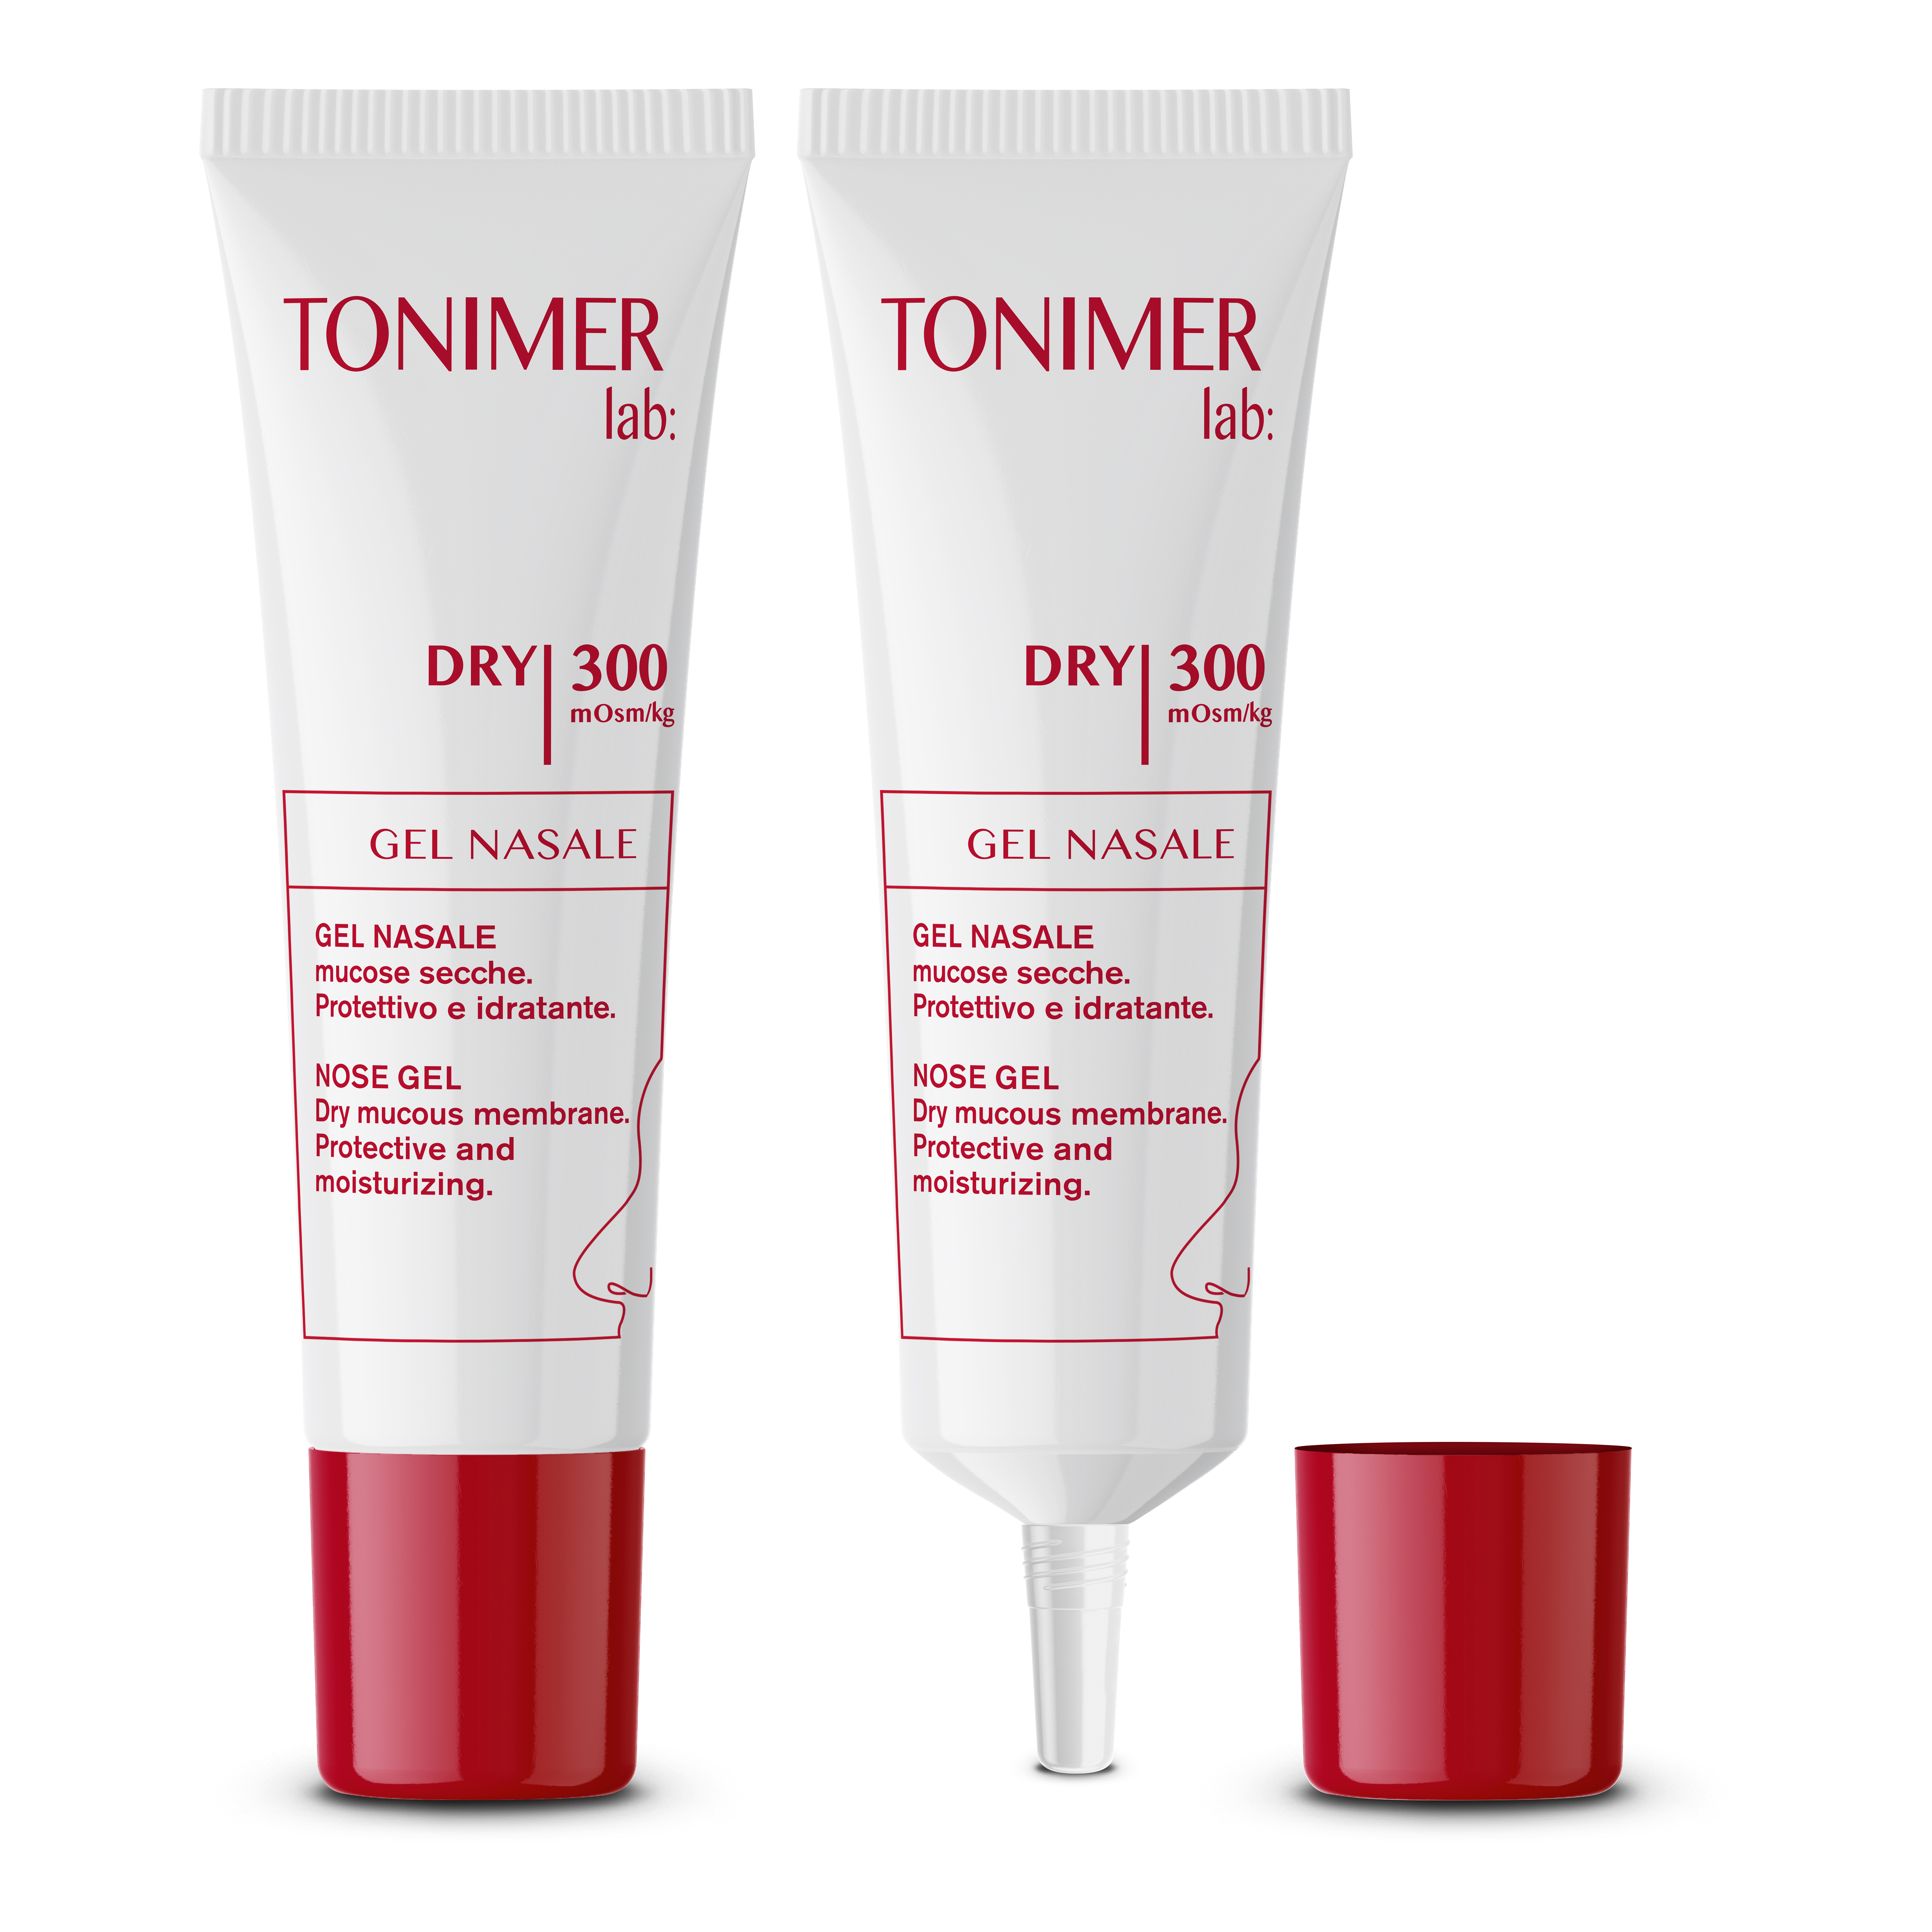 Tonimer lab dry 300 gel nasale - Foto 1 di 1